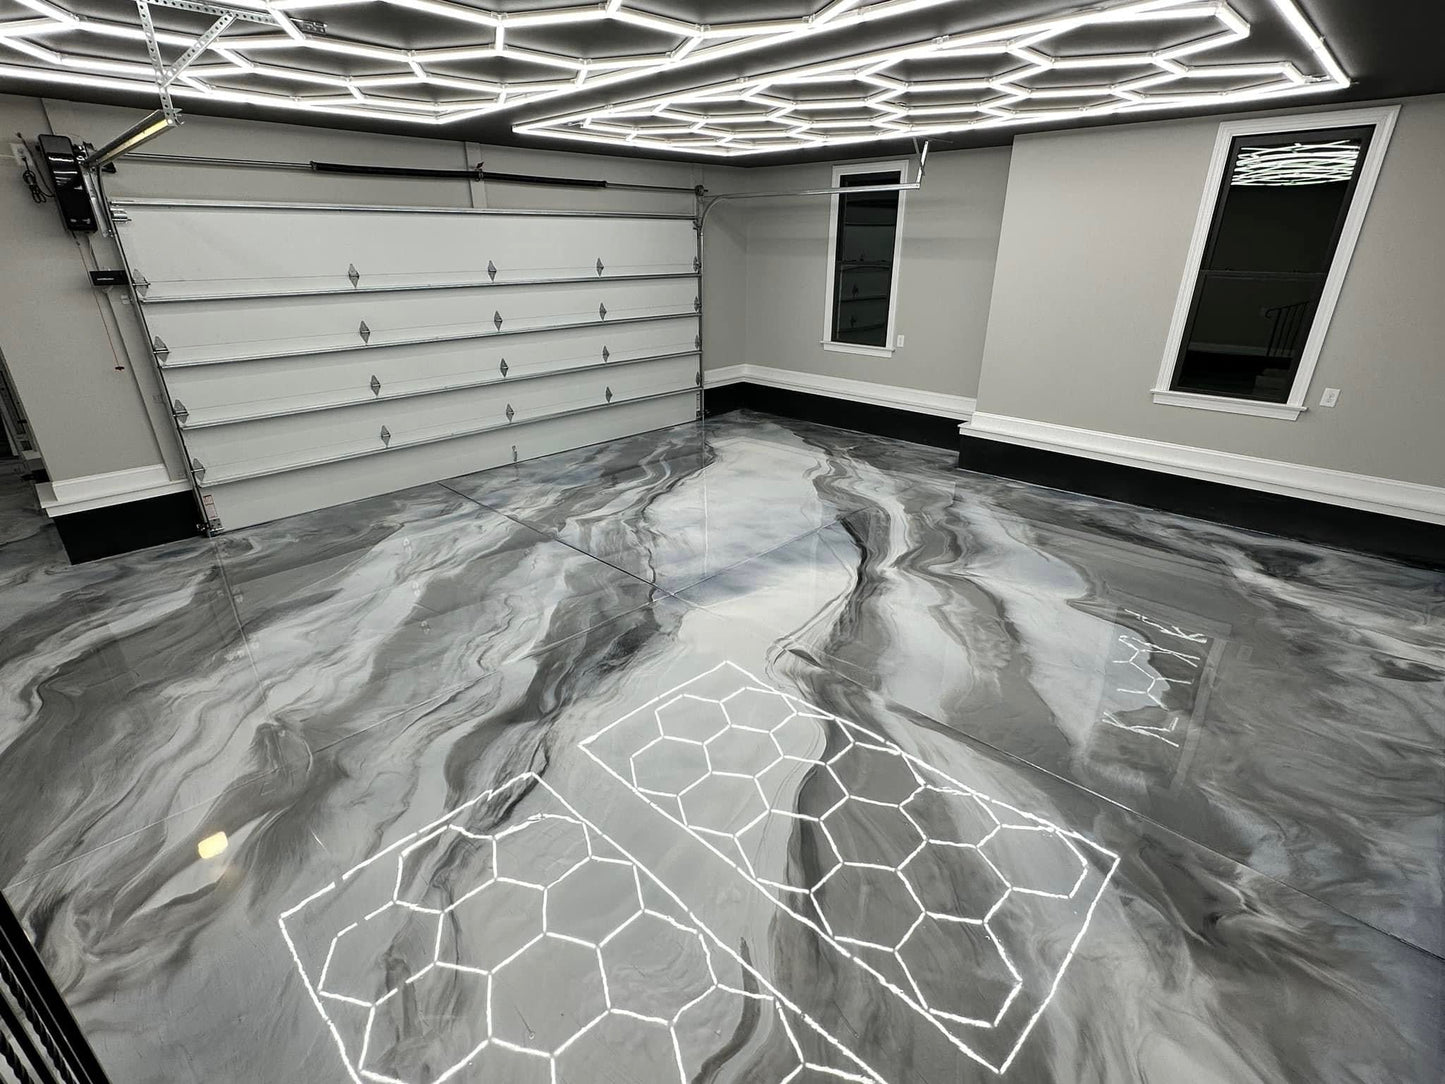 HIVE Hexagon Garage Lighting with Border in Garage with Epoxy Floors